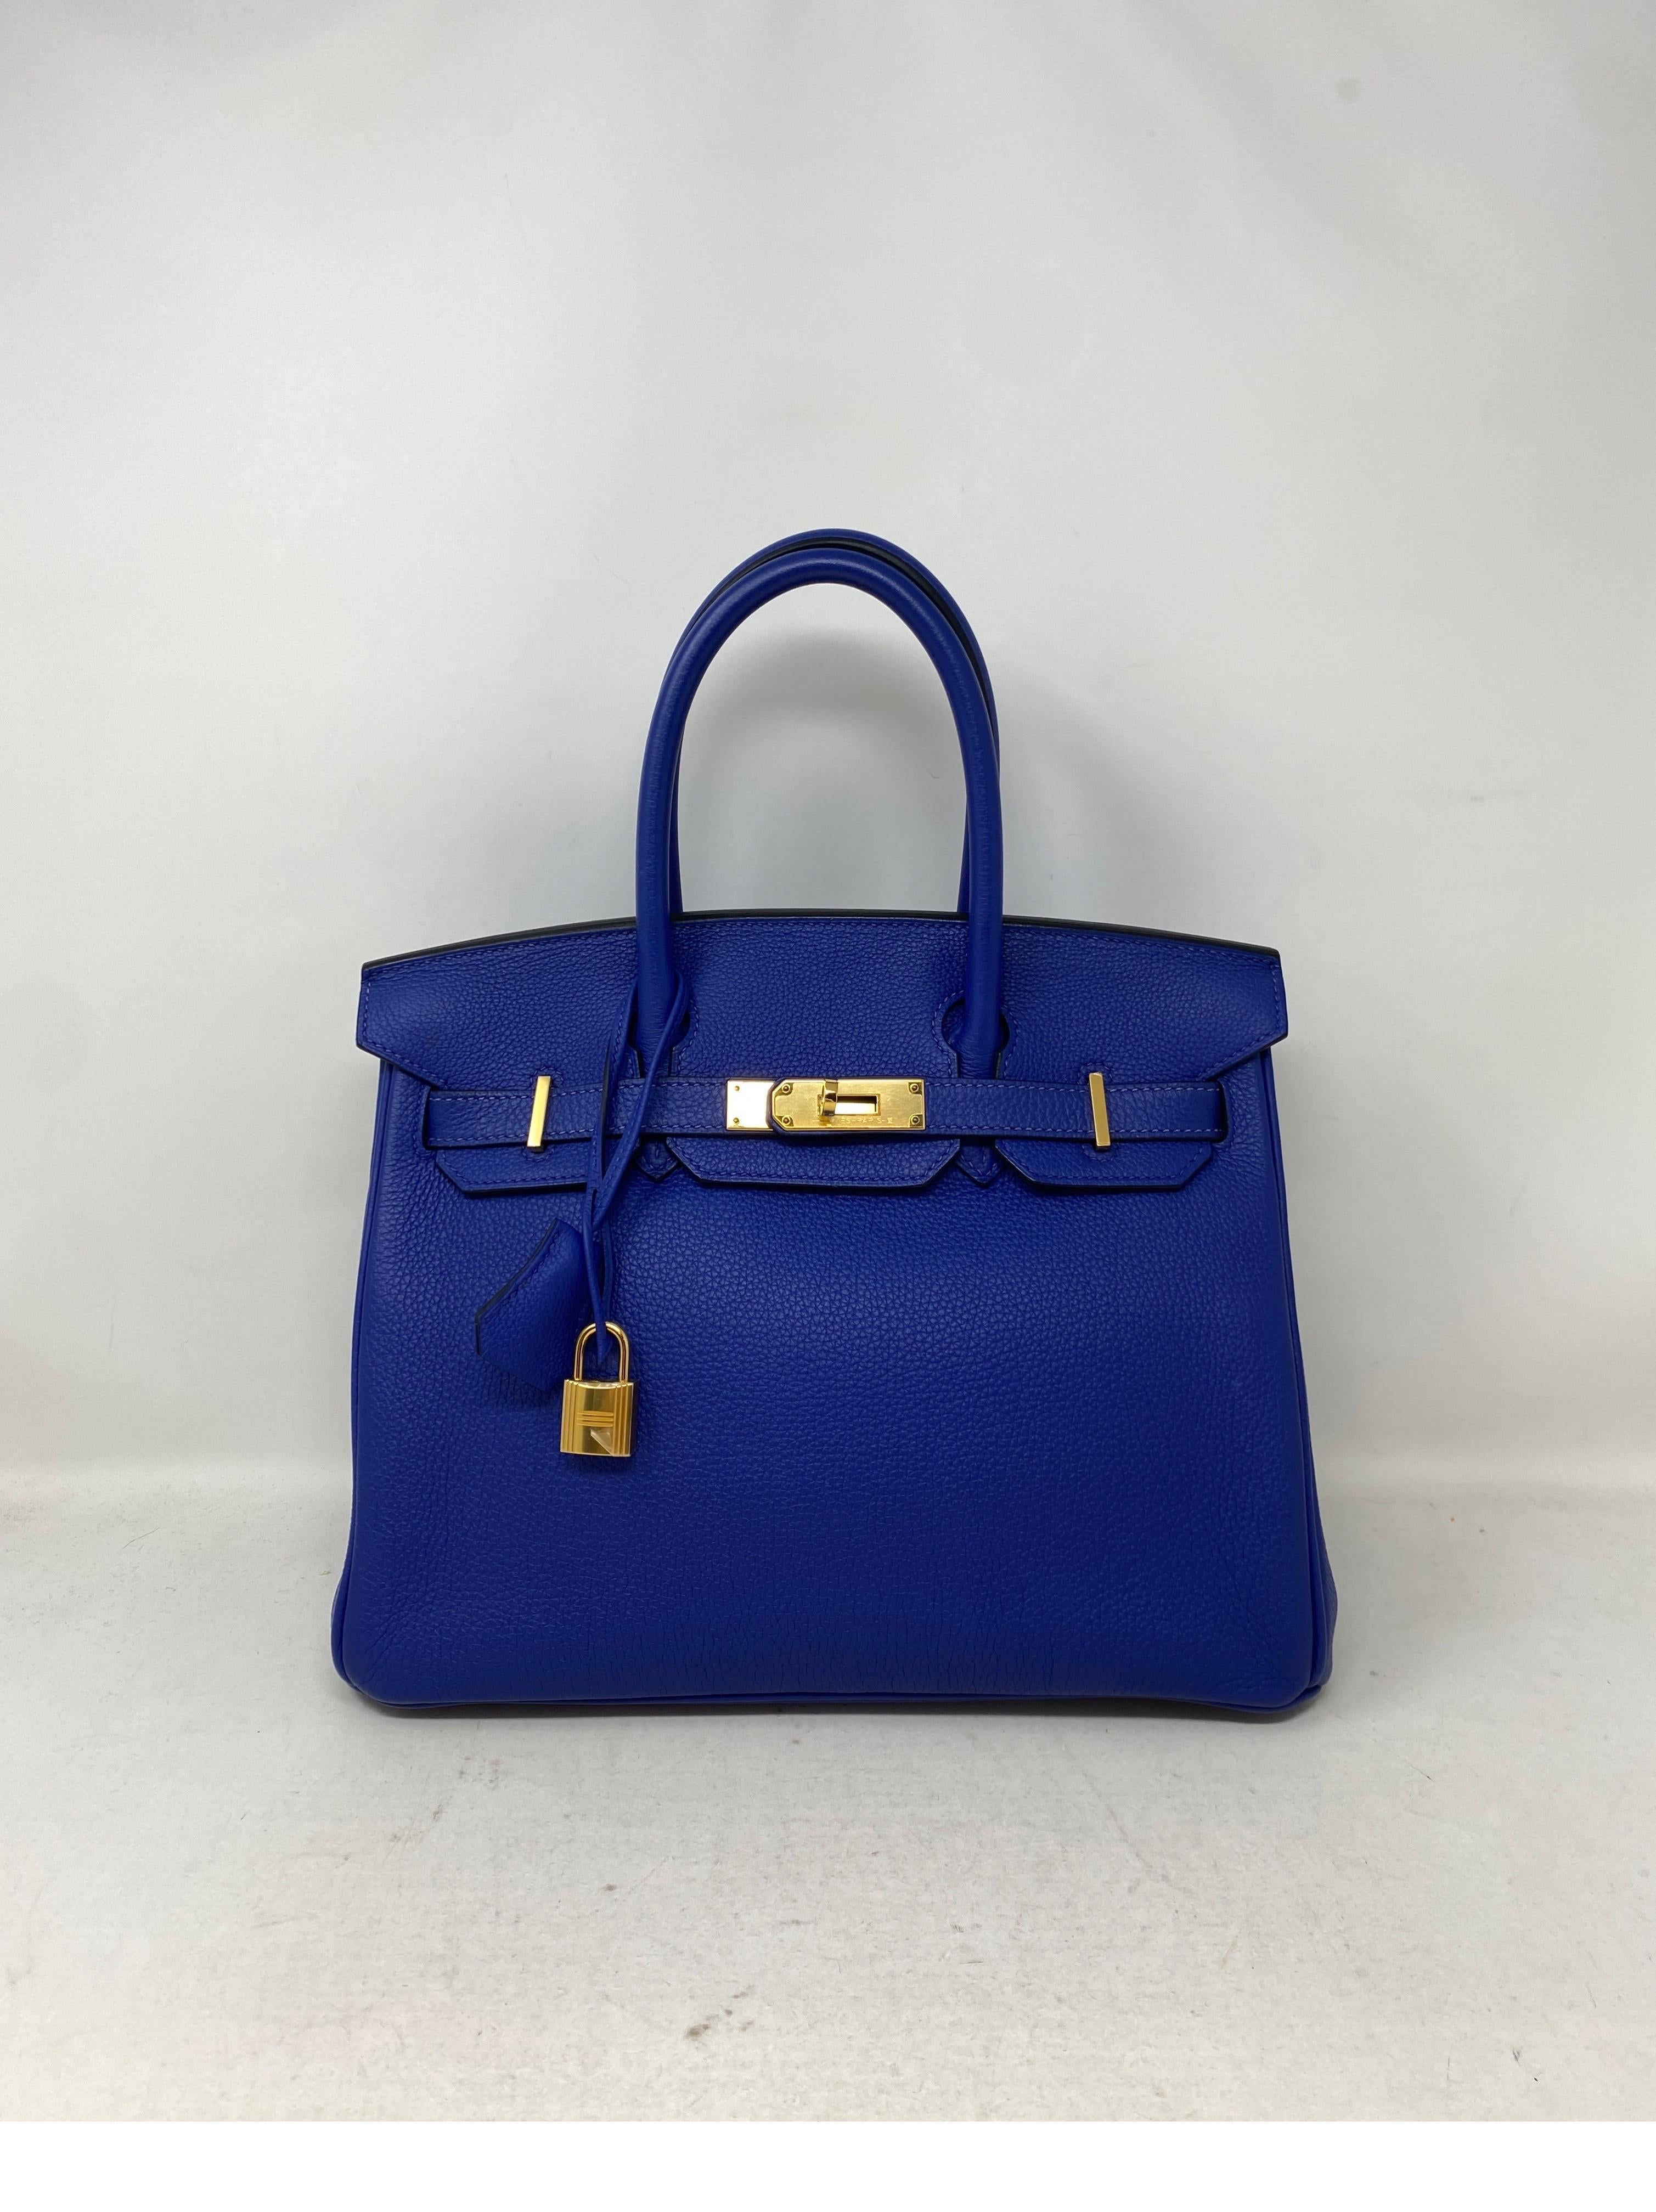 Hermès - Sac Birkin 35 Electrique bleu  13